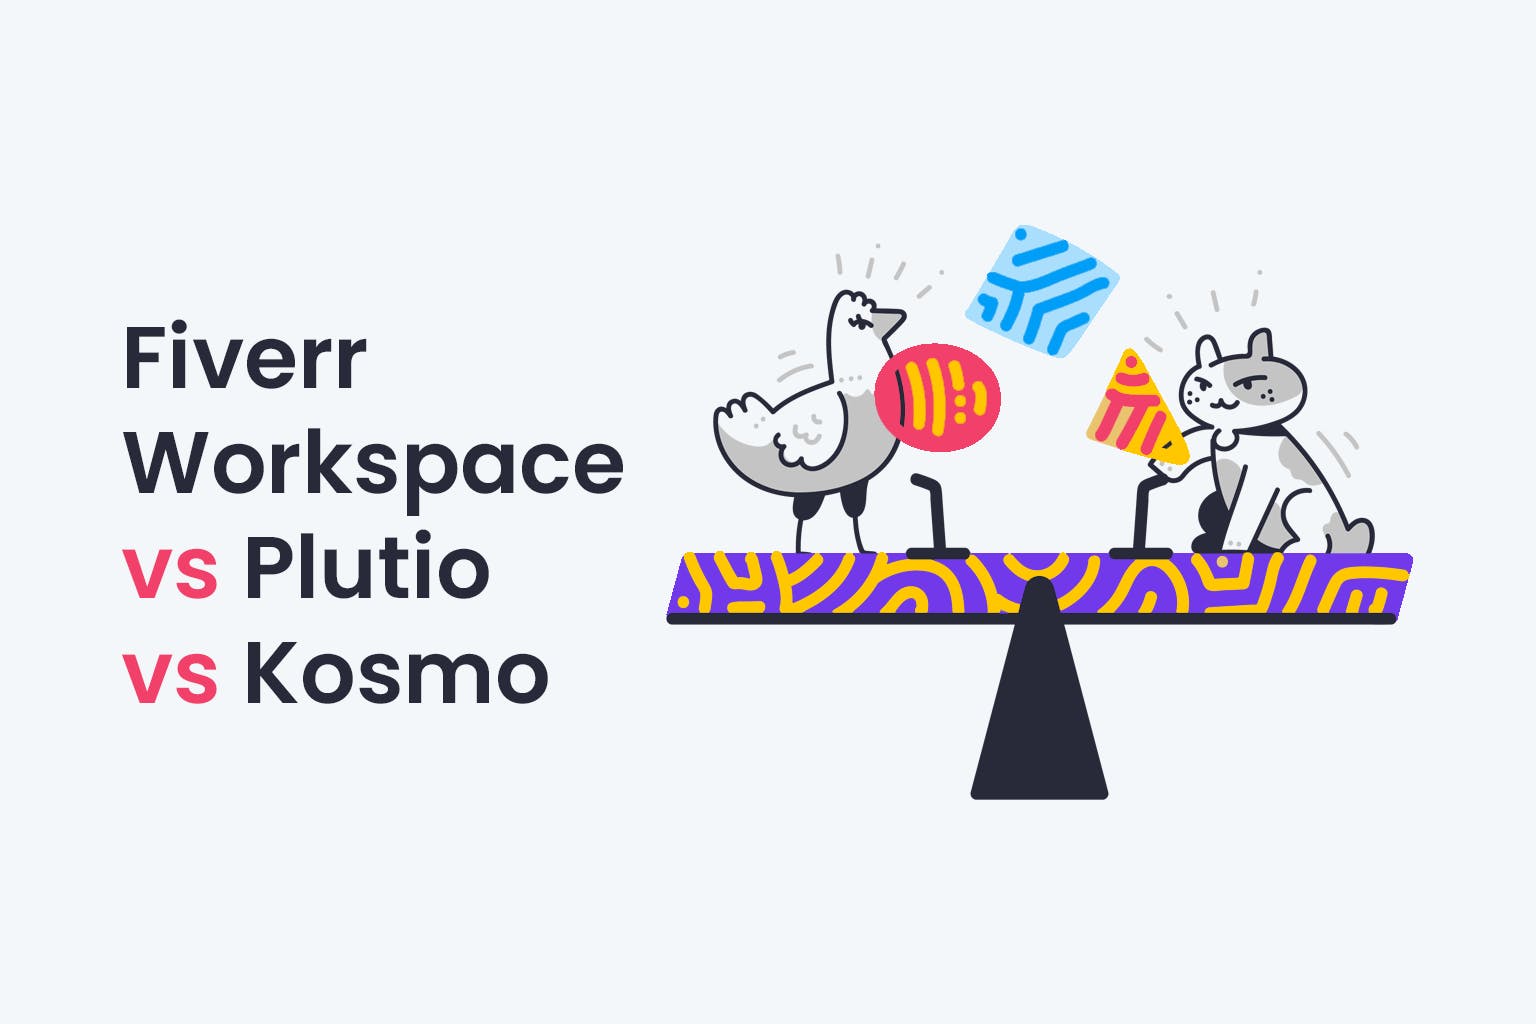 Fiverr Workspace vs Plutio vs Kosmo